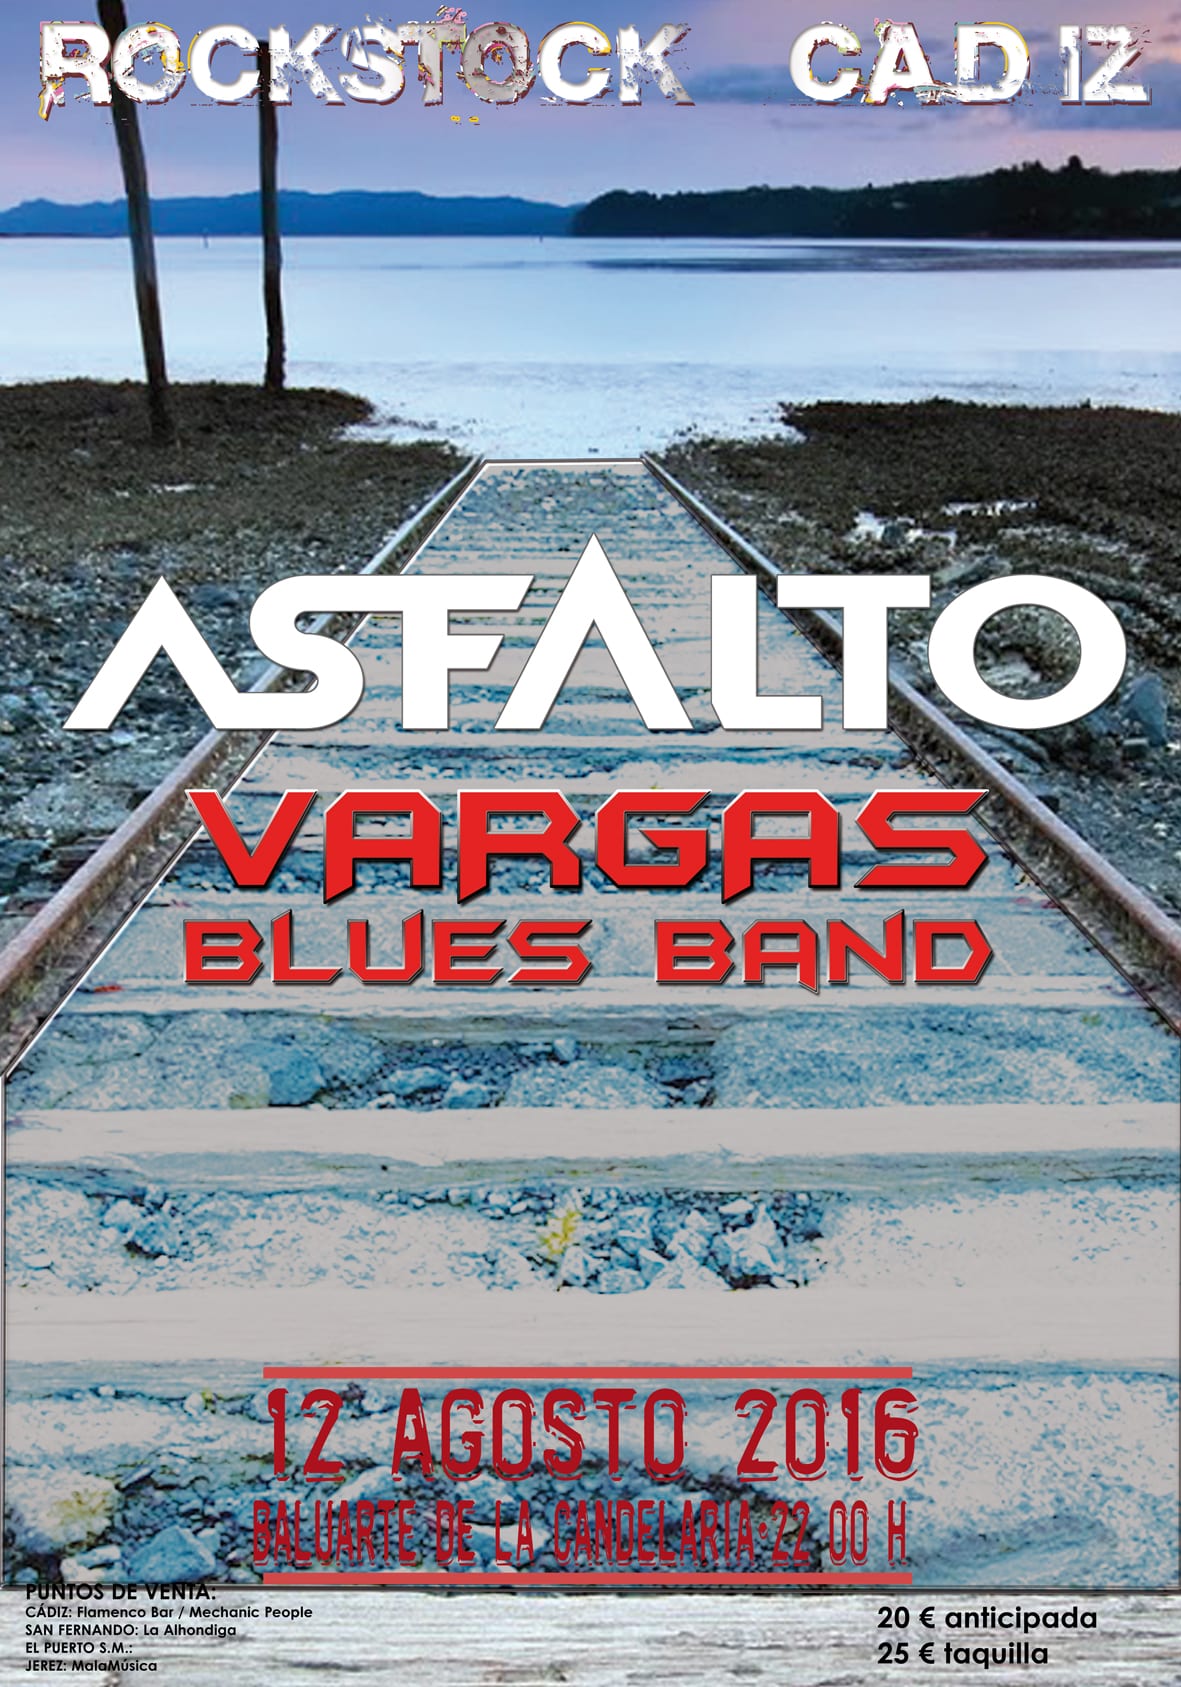 ASFALTO + VARGAS BLUES BAND en agosto en el ROCKSTOCK CÁDIZ